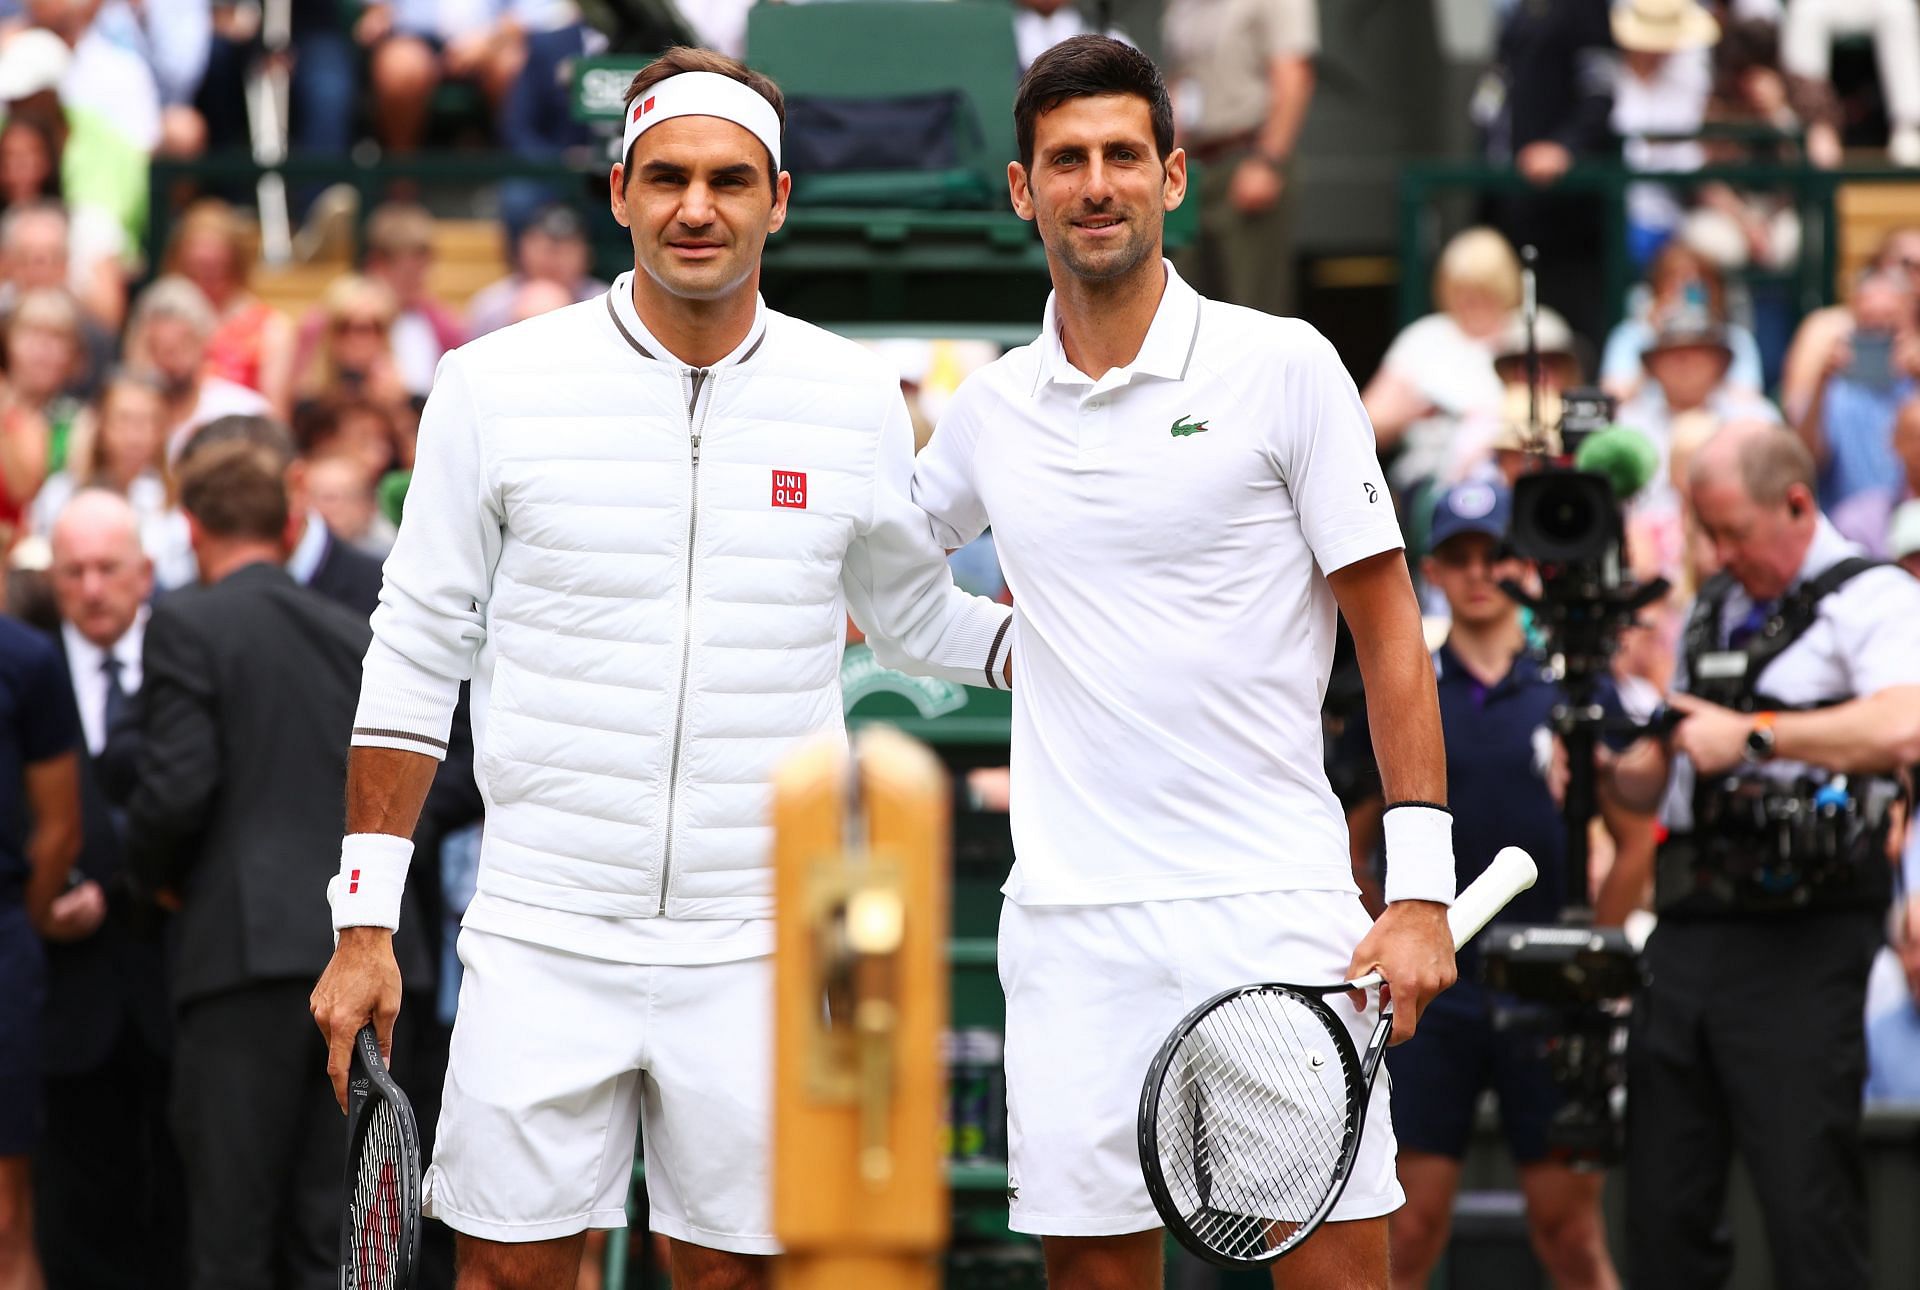 Day Thirteen: The Championships - Wimbledon 2019